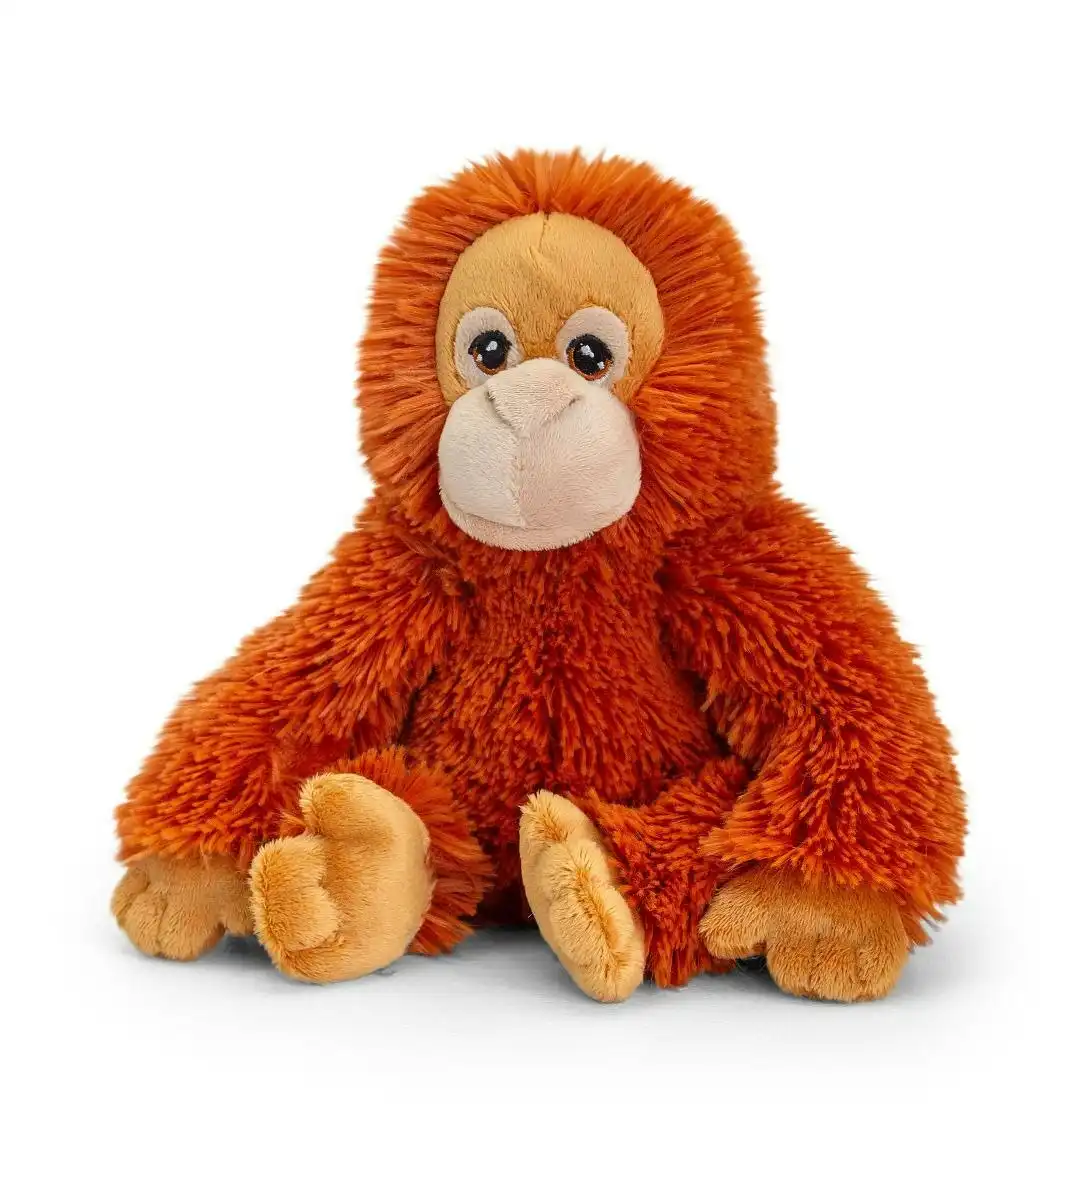 Keeleco 18cm Orangutan Kids/Children Animal Soft Plush Stuffed Toy Red 3y+